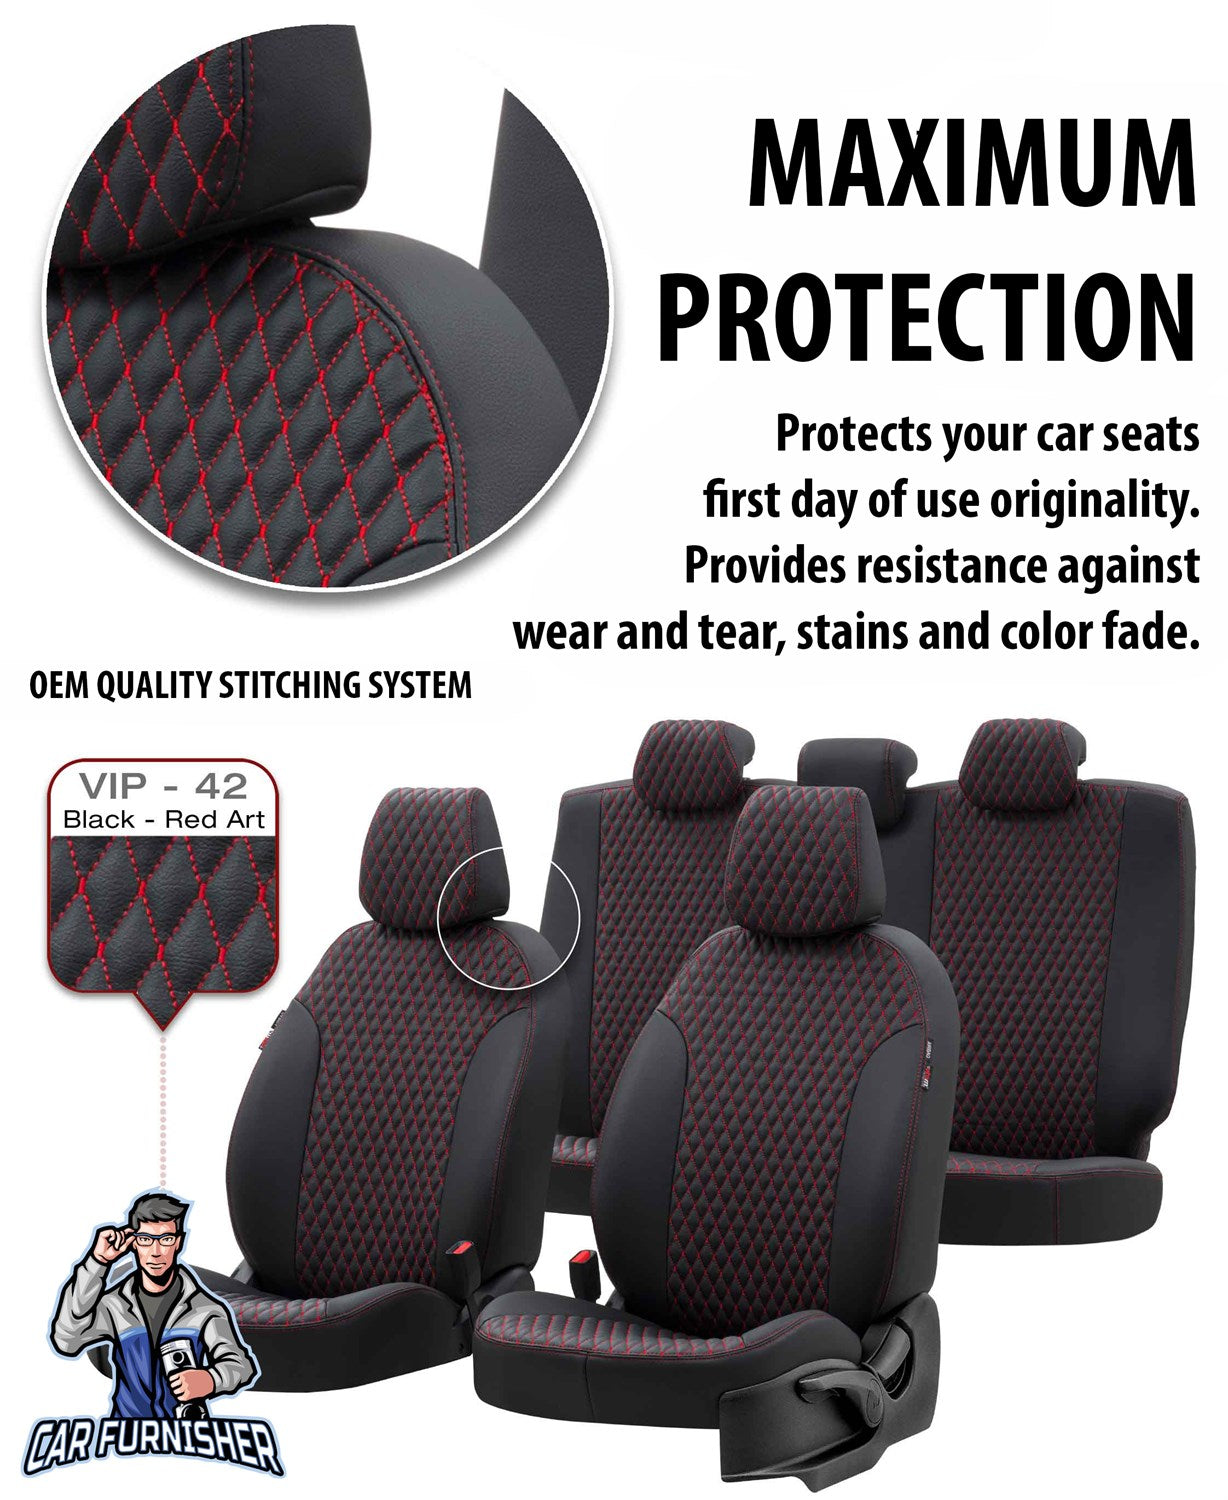 Citroen C2 Seat Covers Amsterdam Leather Design Black Leather